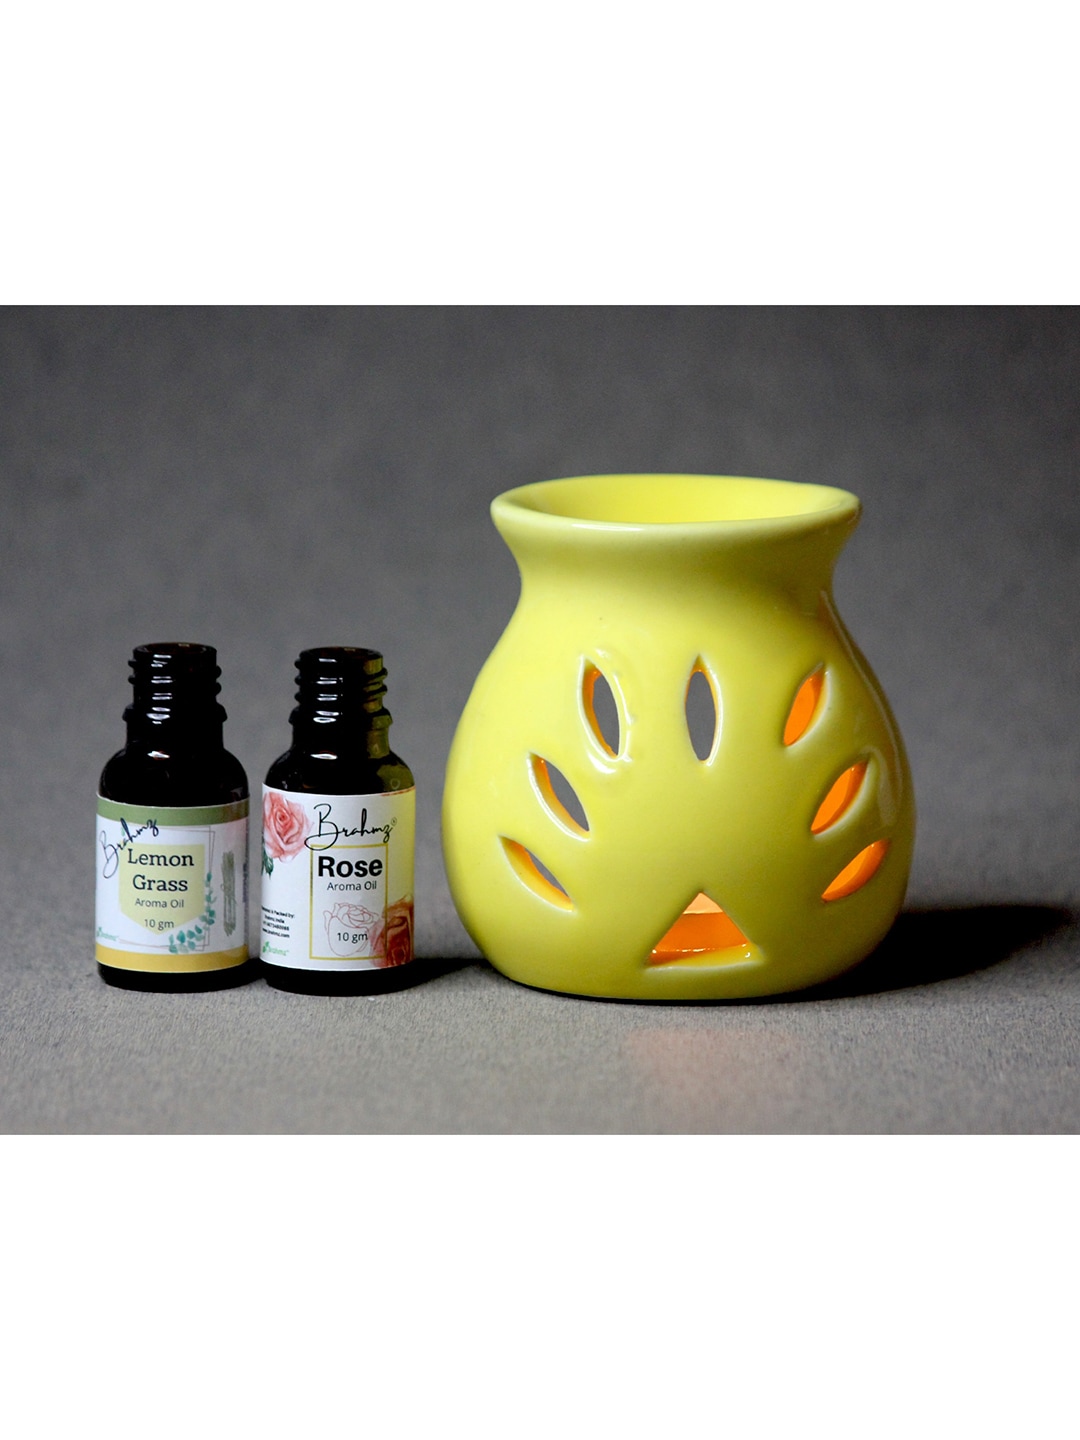 Brahmz Yellow Ceramic Aroma Oil Diffuser Burner with 2 Aroma Oils Price in India